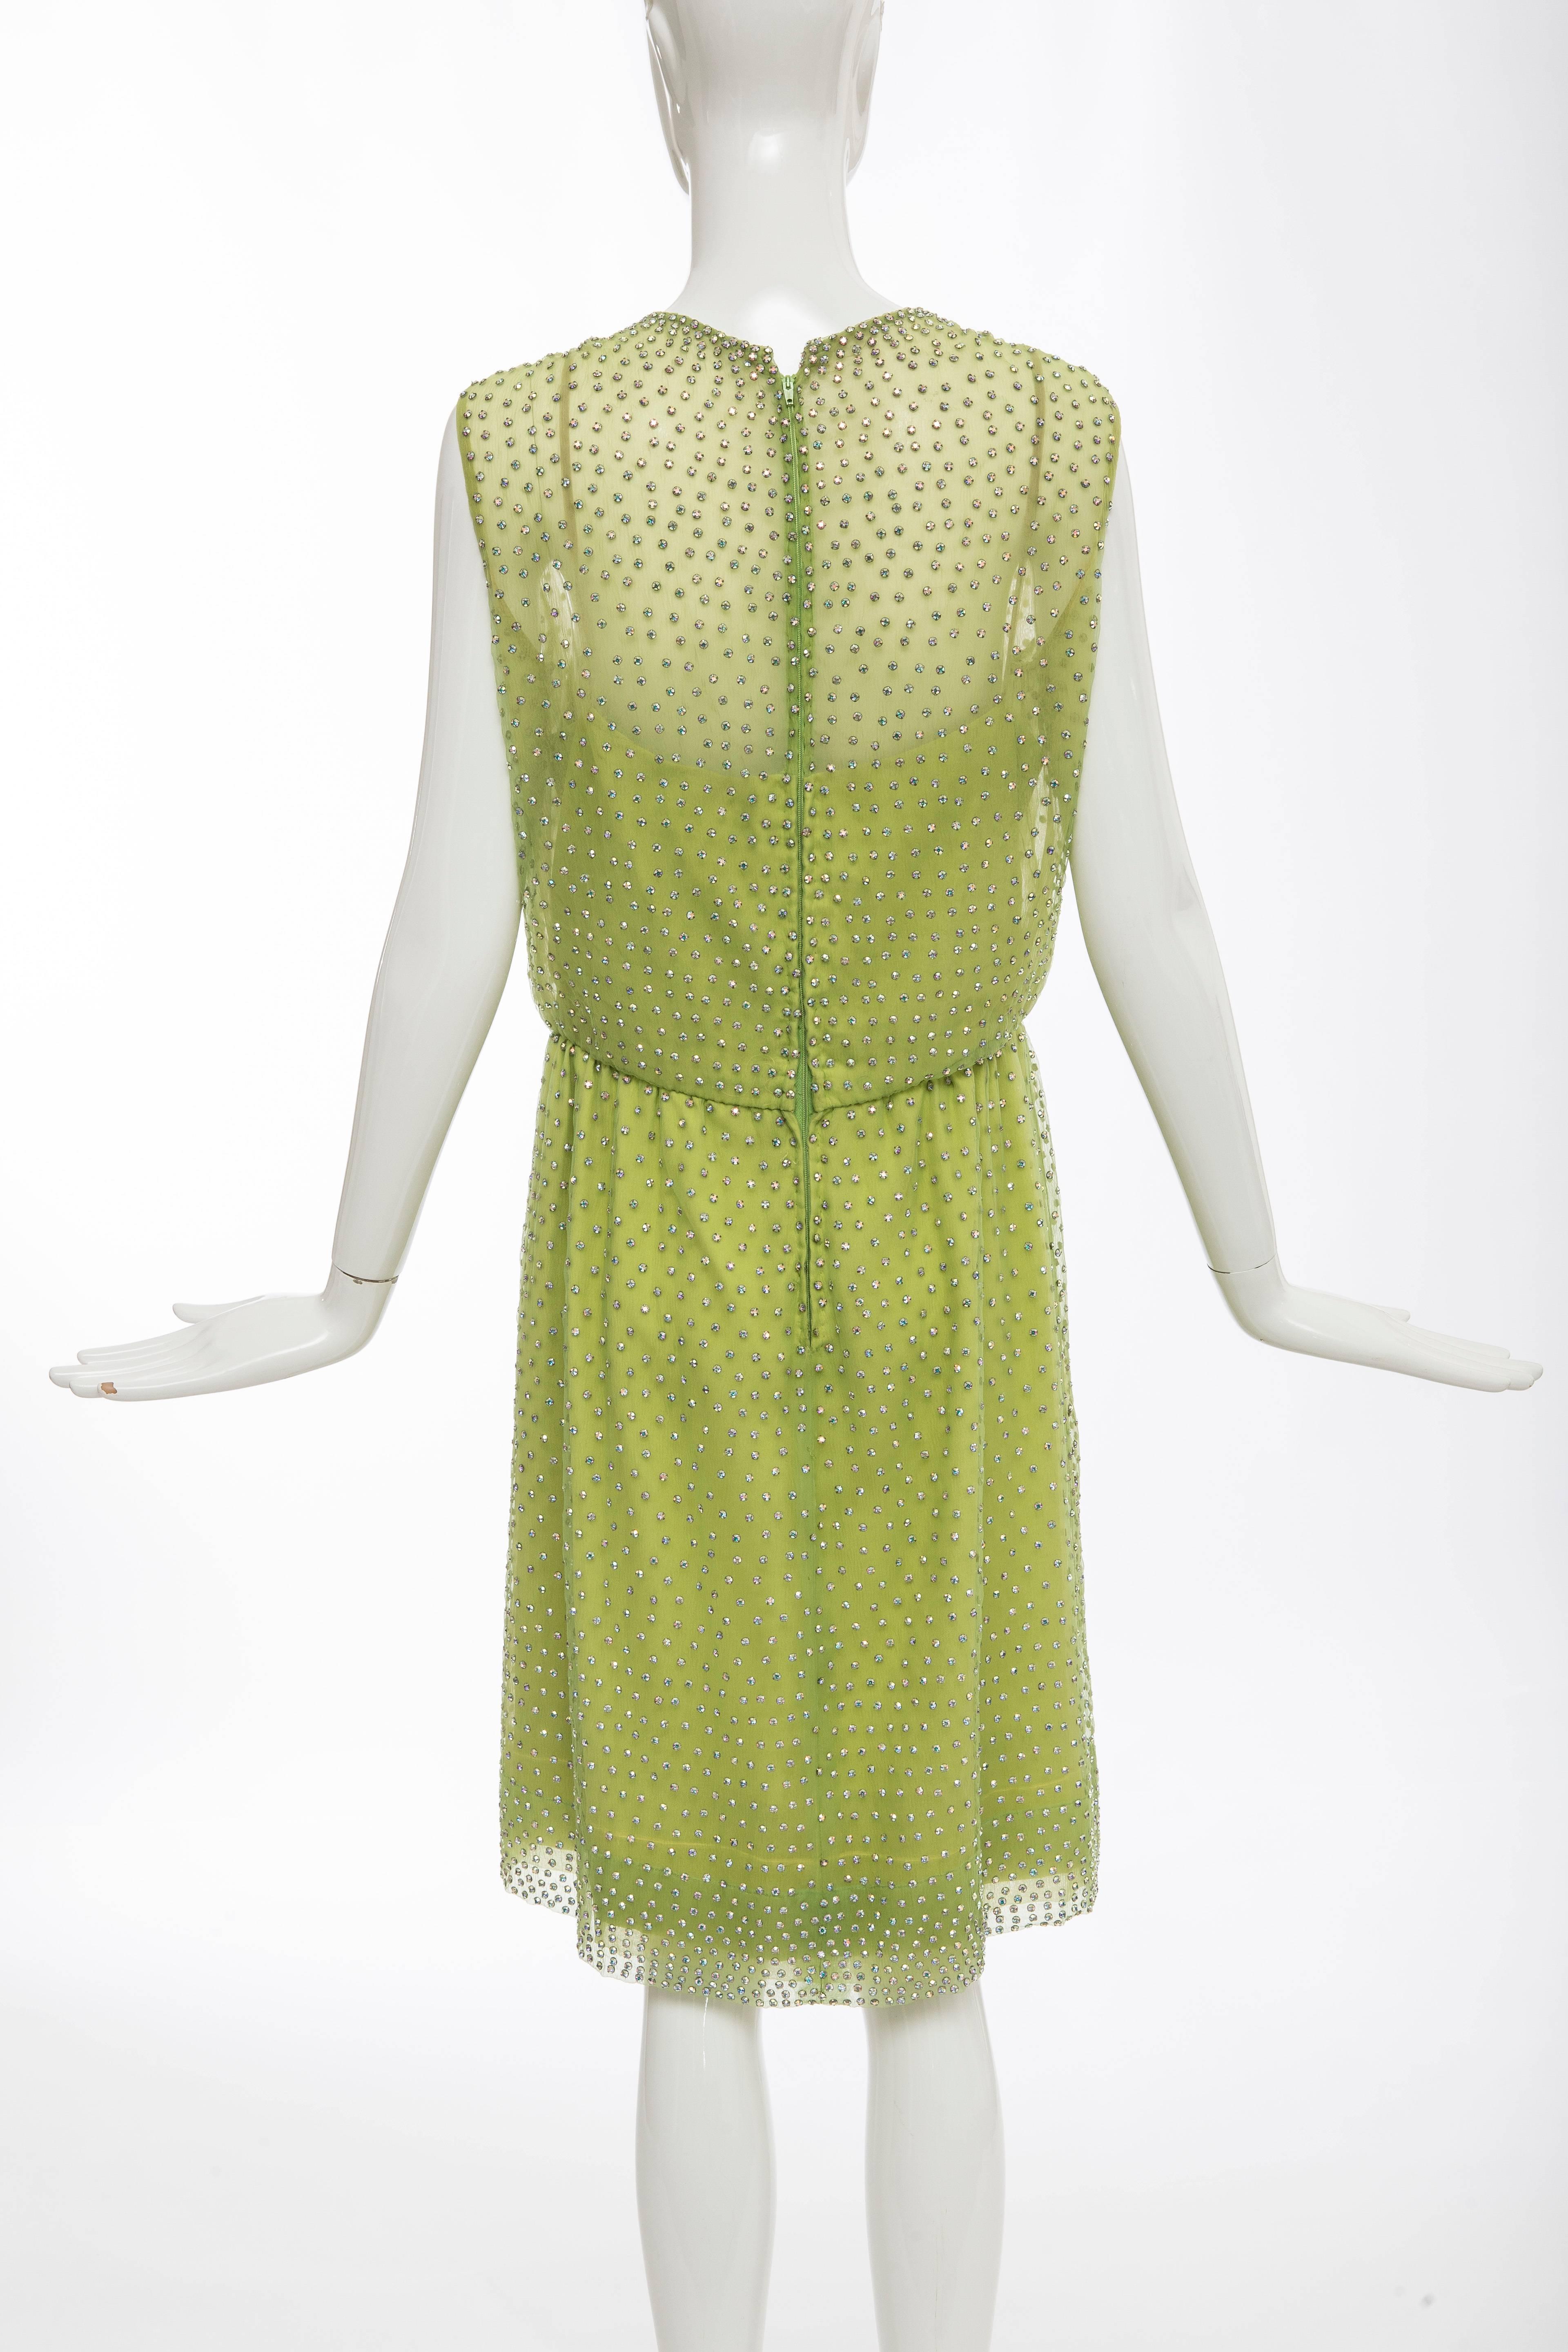 Harvey Berin designed by Karen Stark Silk Dress Prong Set Crystals, Circa 1960's In Excellent Condition For Sale In Cincinnati, OH